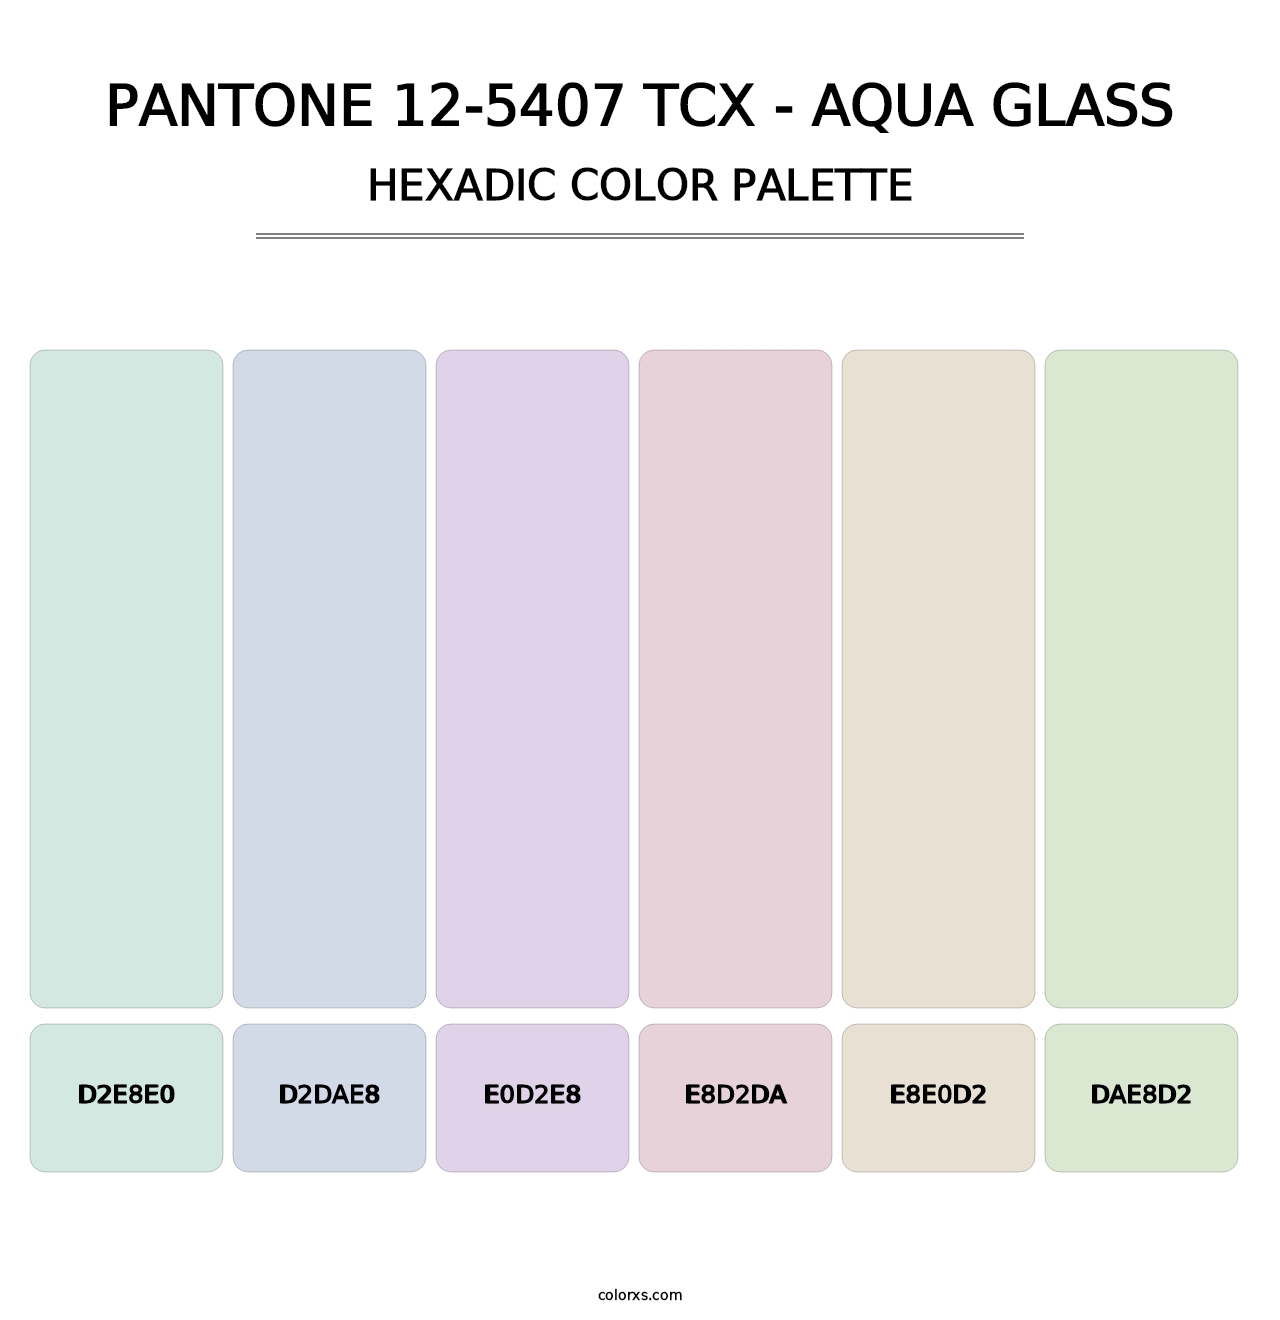 PANTONE 12-5407 TCX - Aqua Glass - Hexadic Color Palette